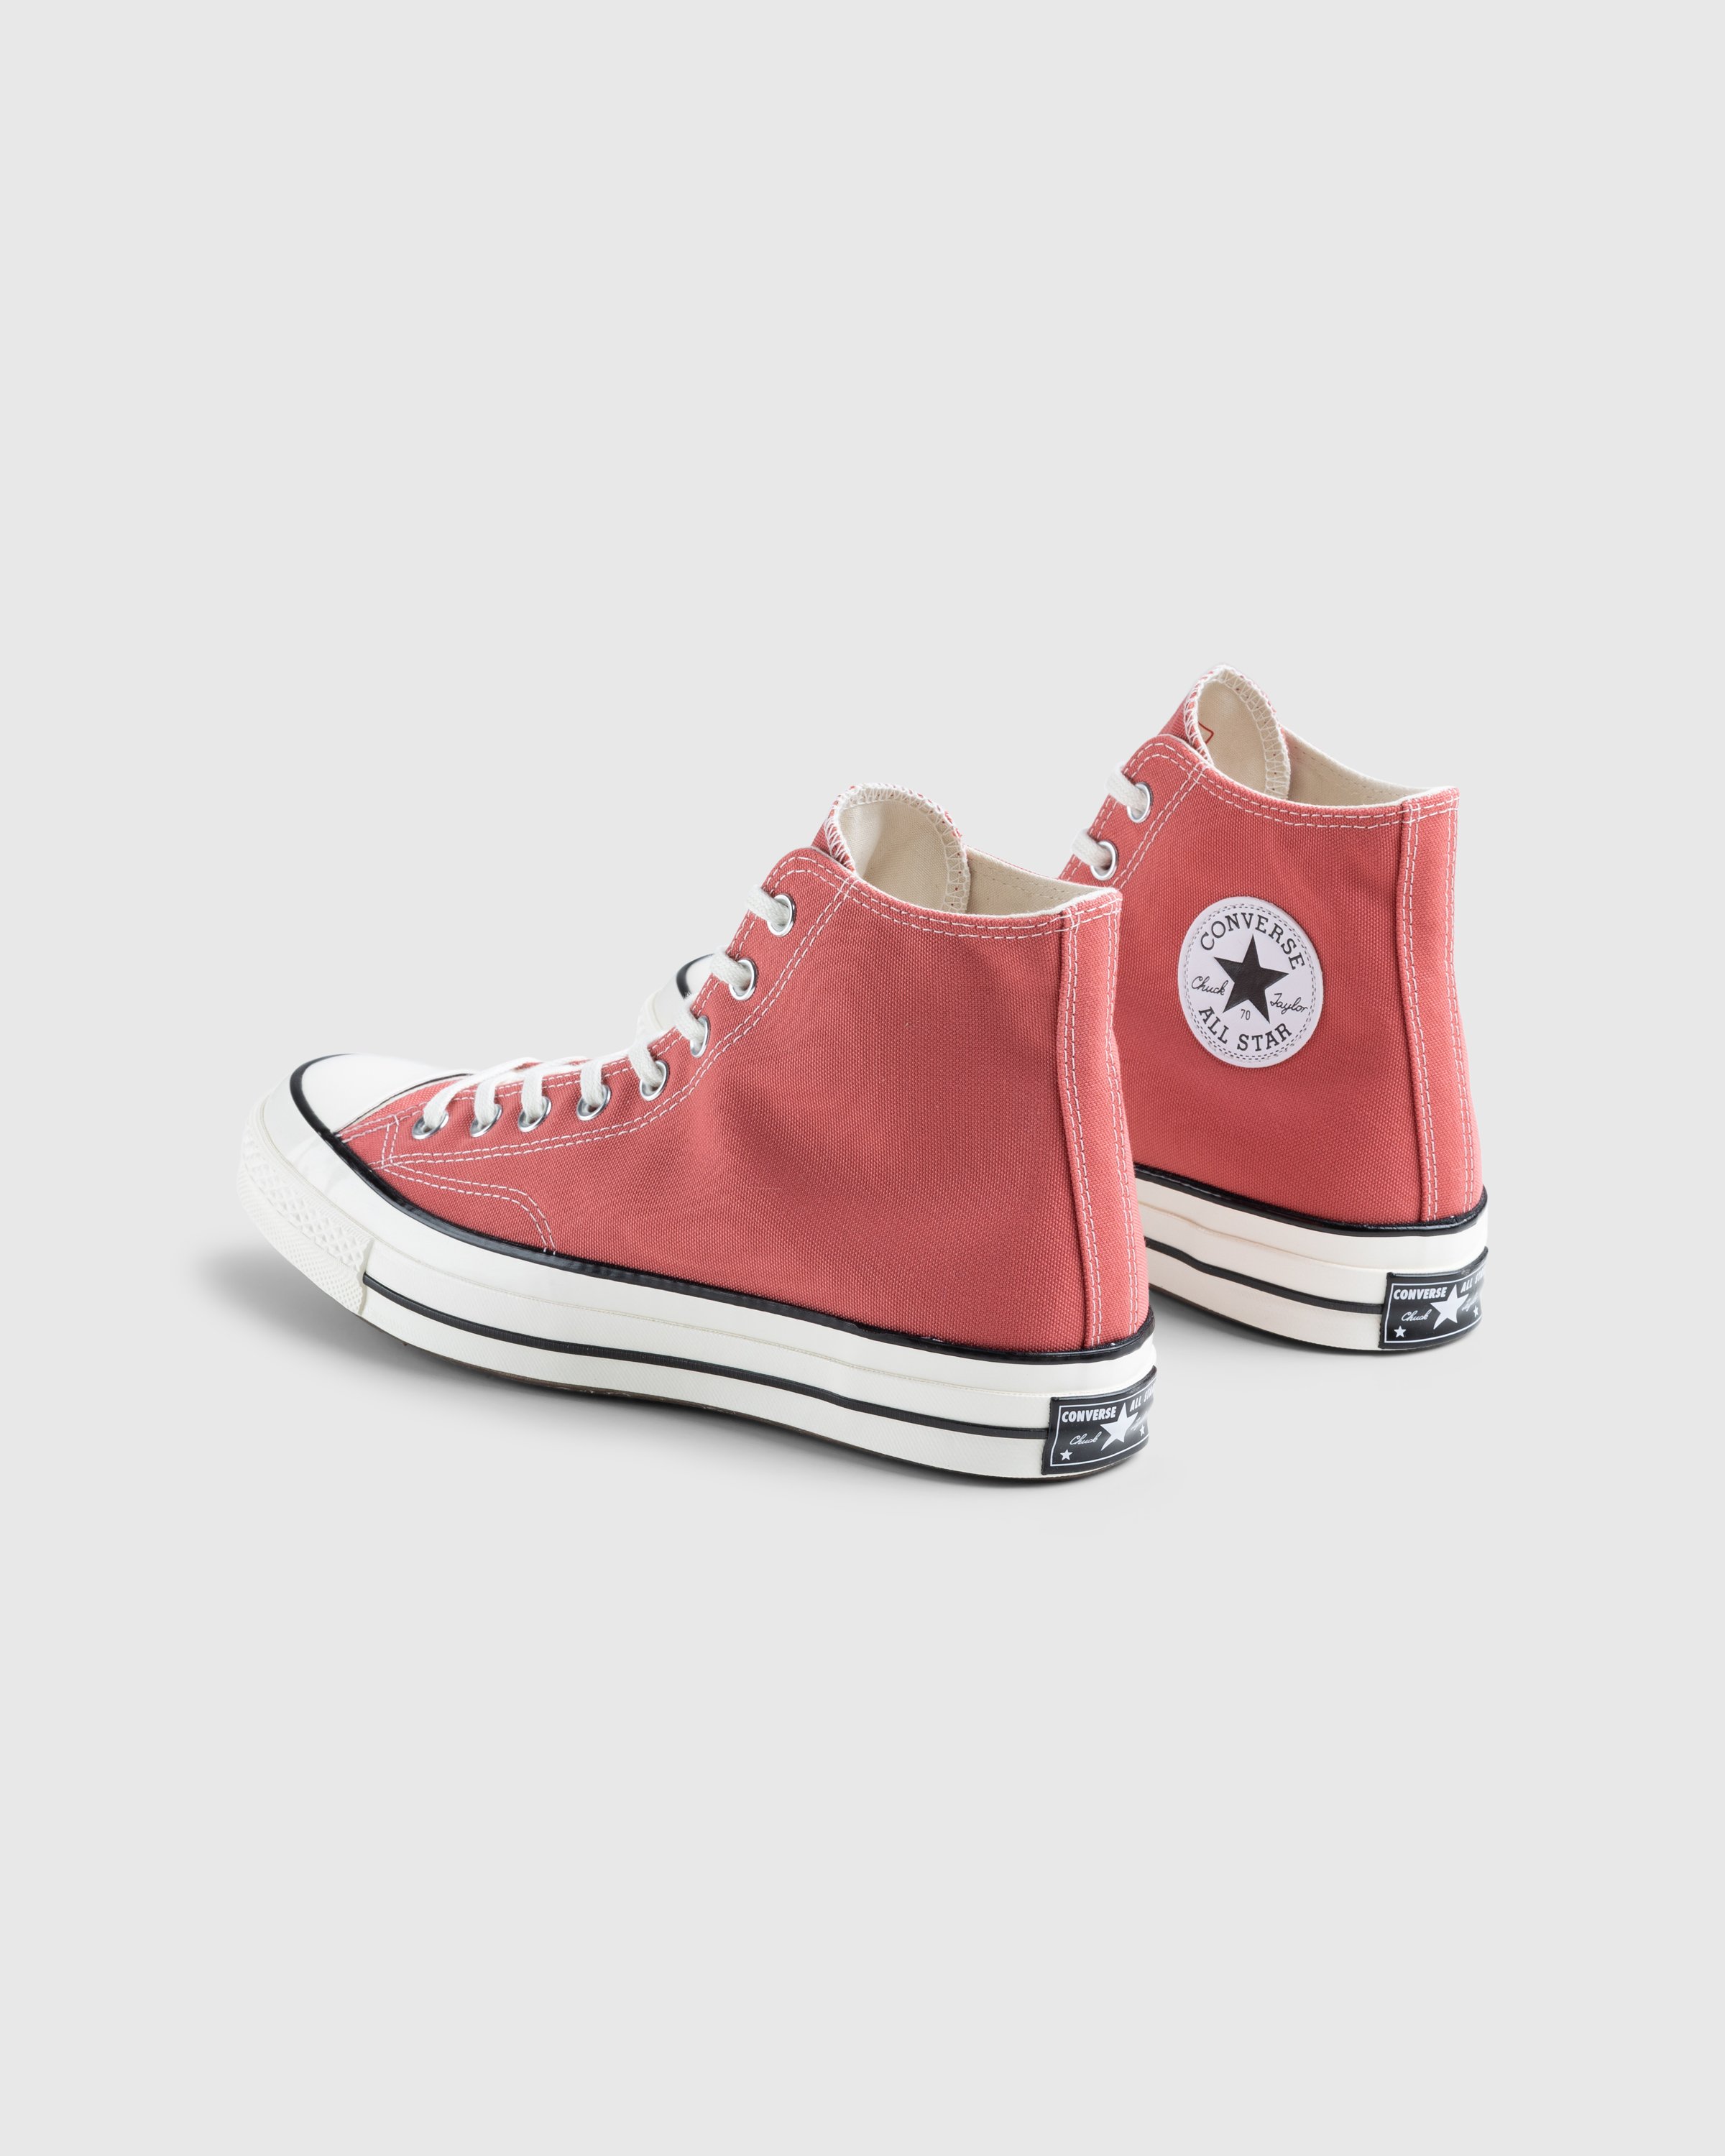 Converse - Chuck 70 HI Rhubarb Pie/Egret/Black - Footwear - Red - Image 4